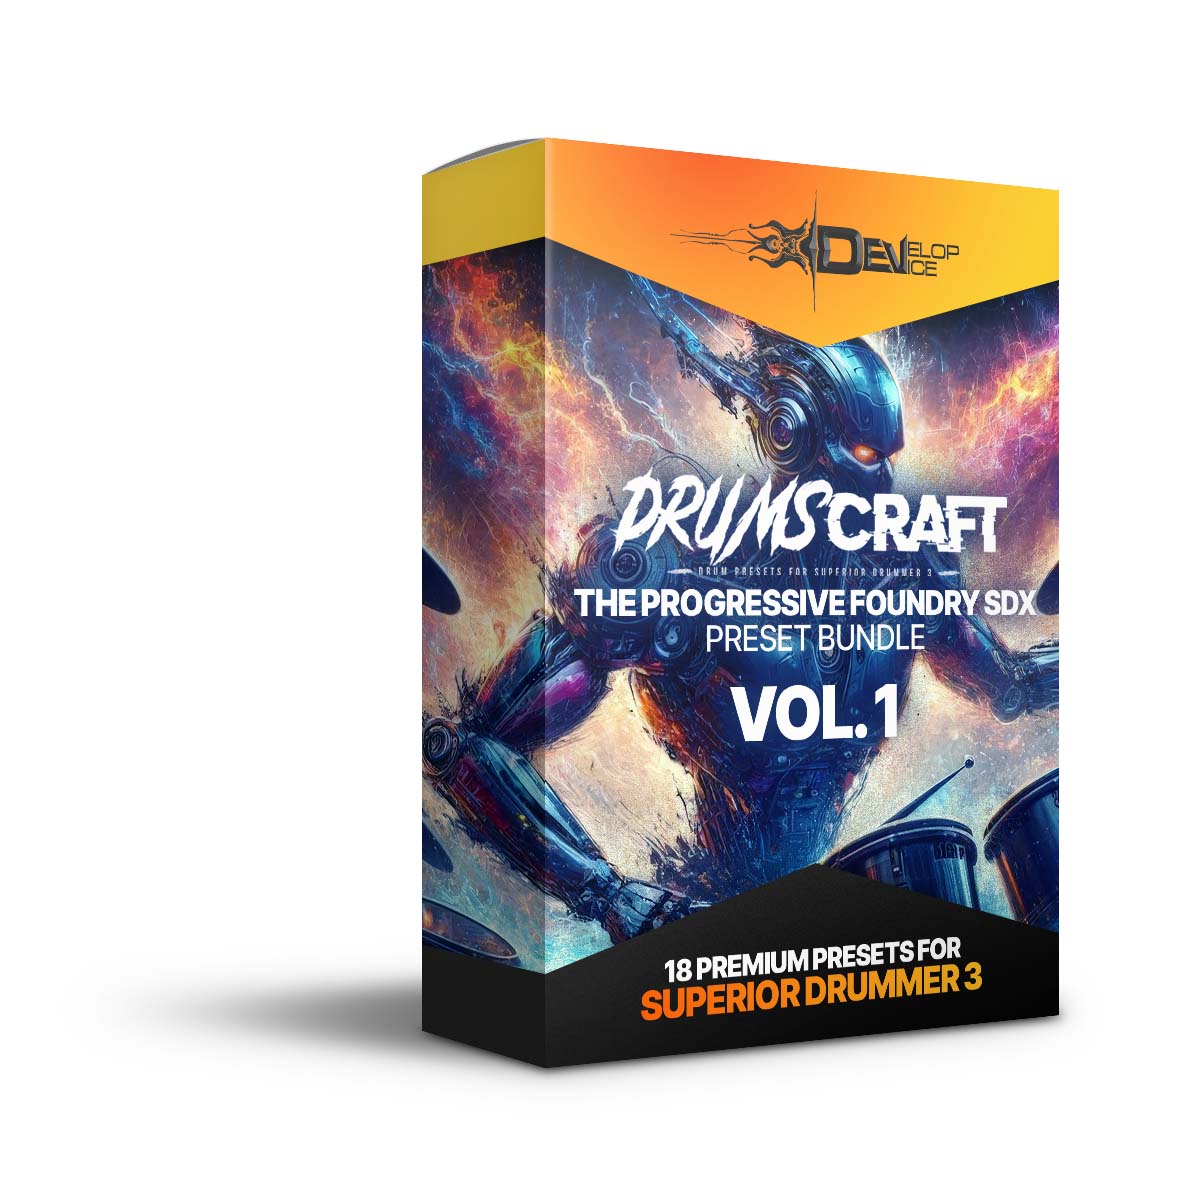 Superior Drummer 3 Preset Bundle for The Progressive Foundry SDX Vol. 1 - Superior Drummer 3 Presets - Develop Device Studio